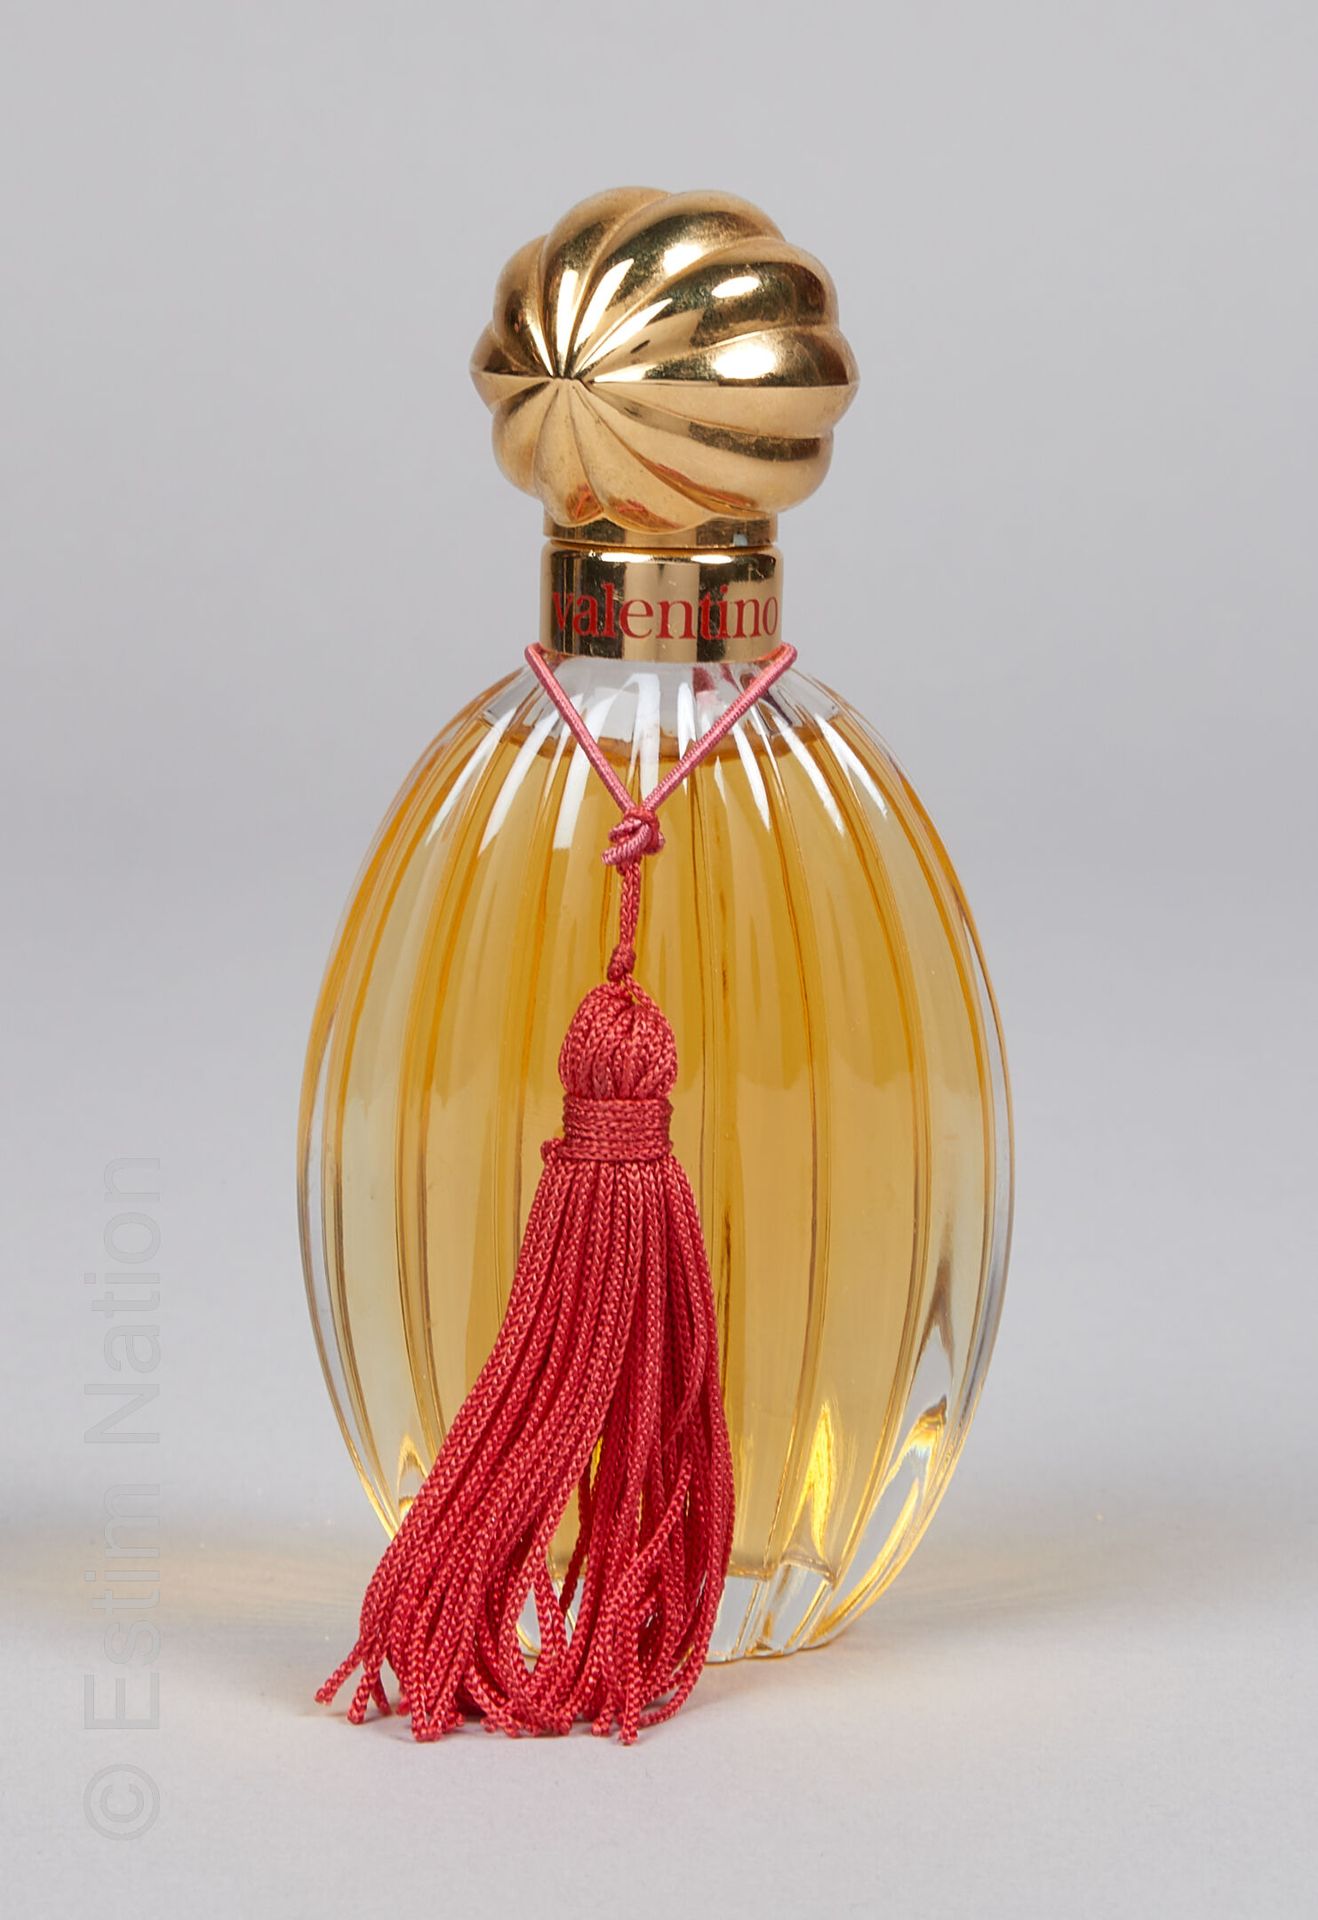 VALENTINO "Valentino" 椭圆形玻璃瓶，有条纹装饰。金色的塞子和彩色的流苏。淡香水，容量30毫升。